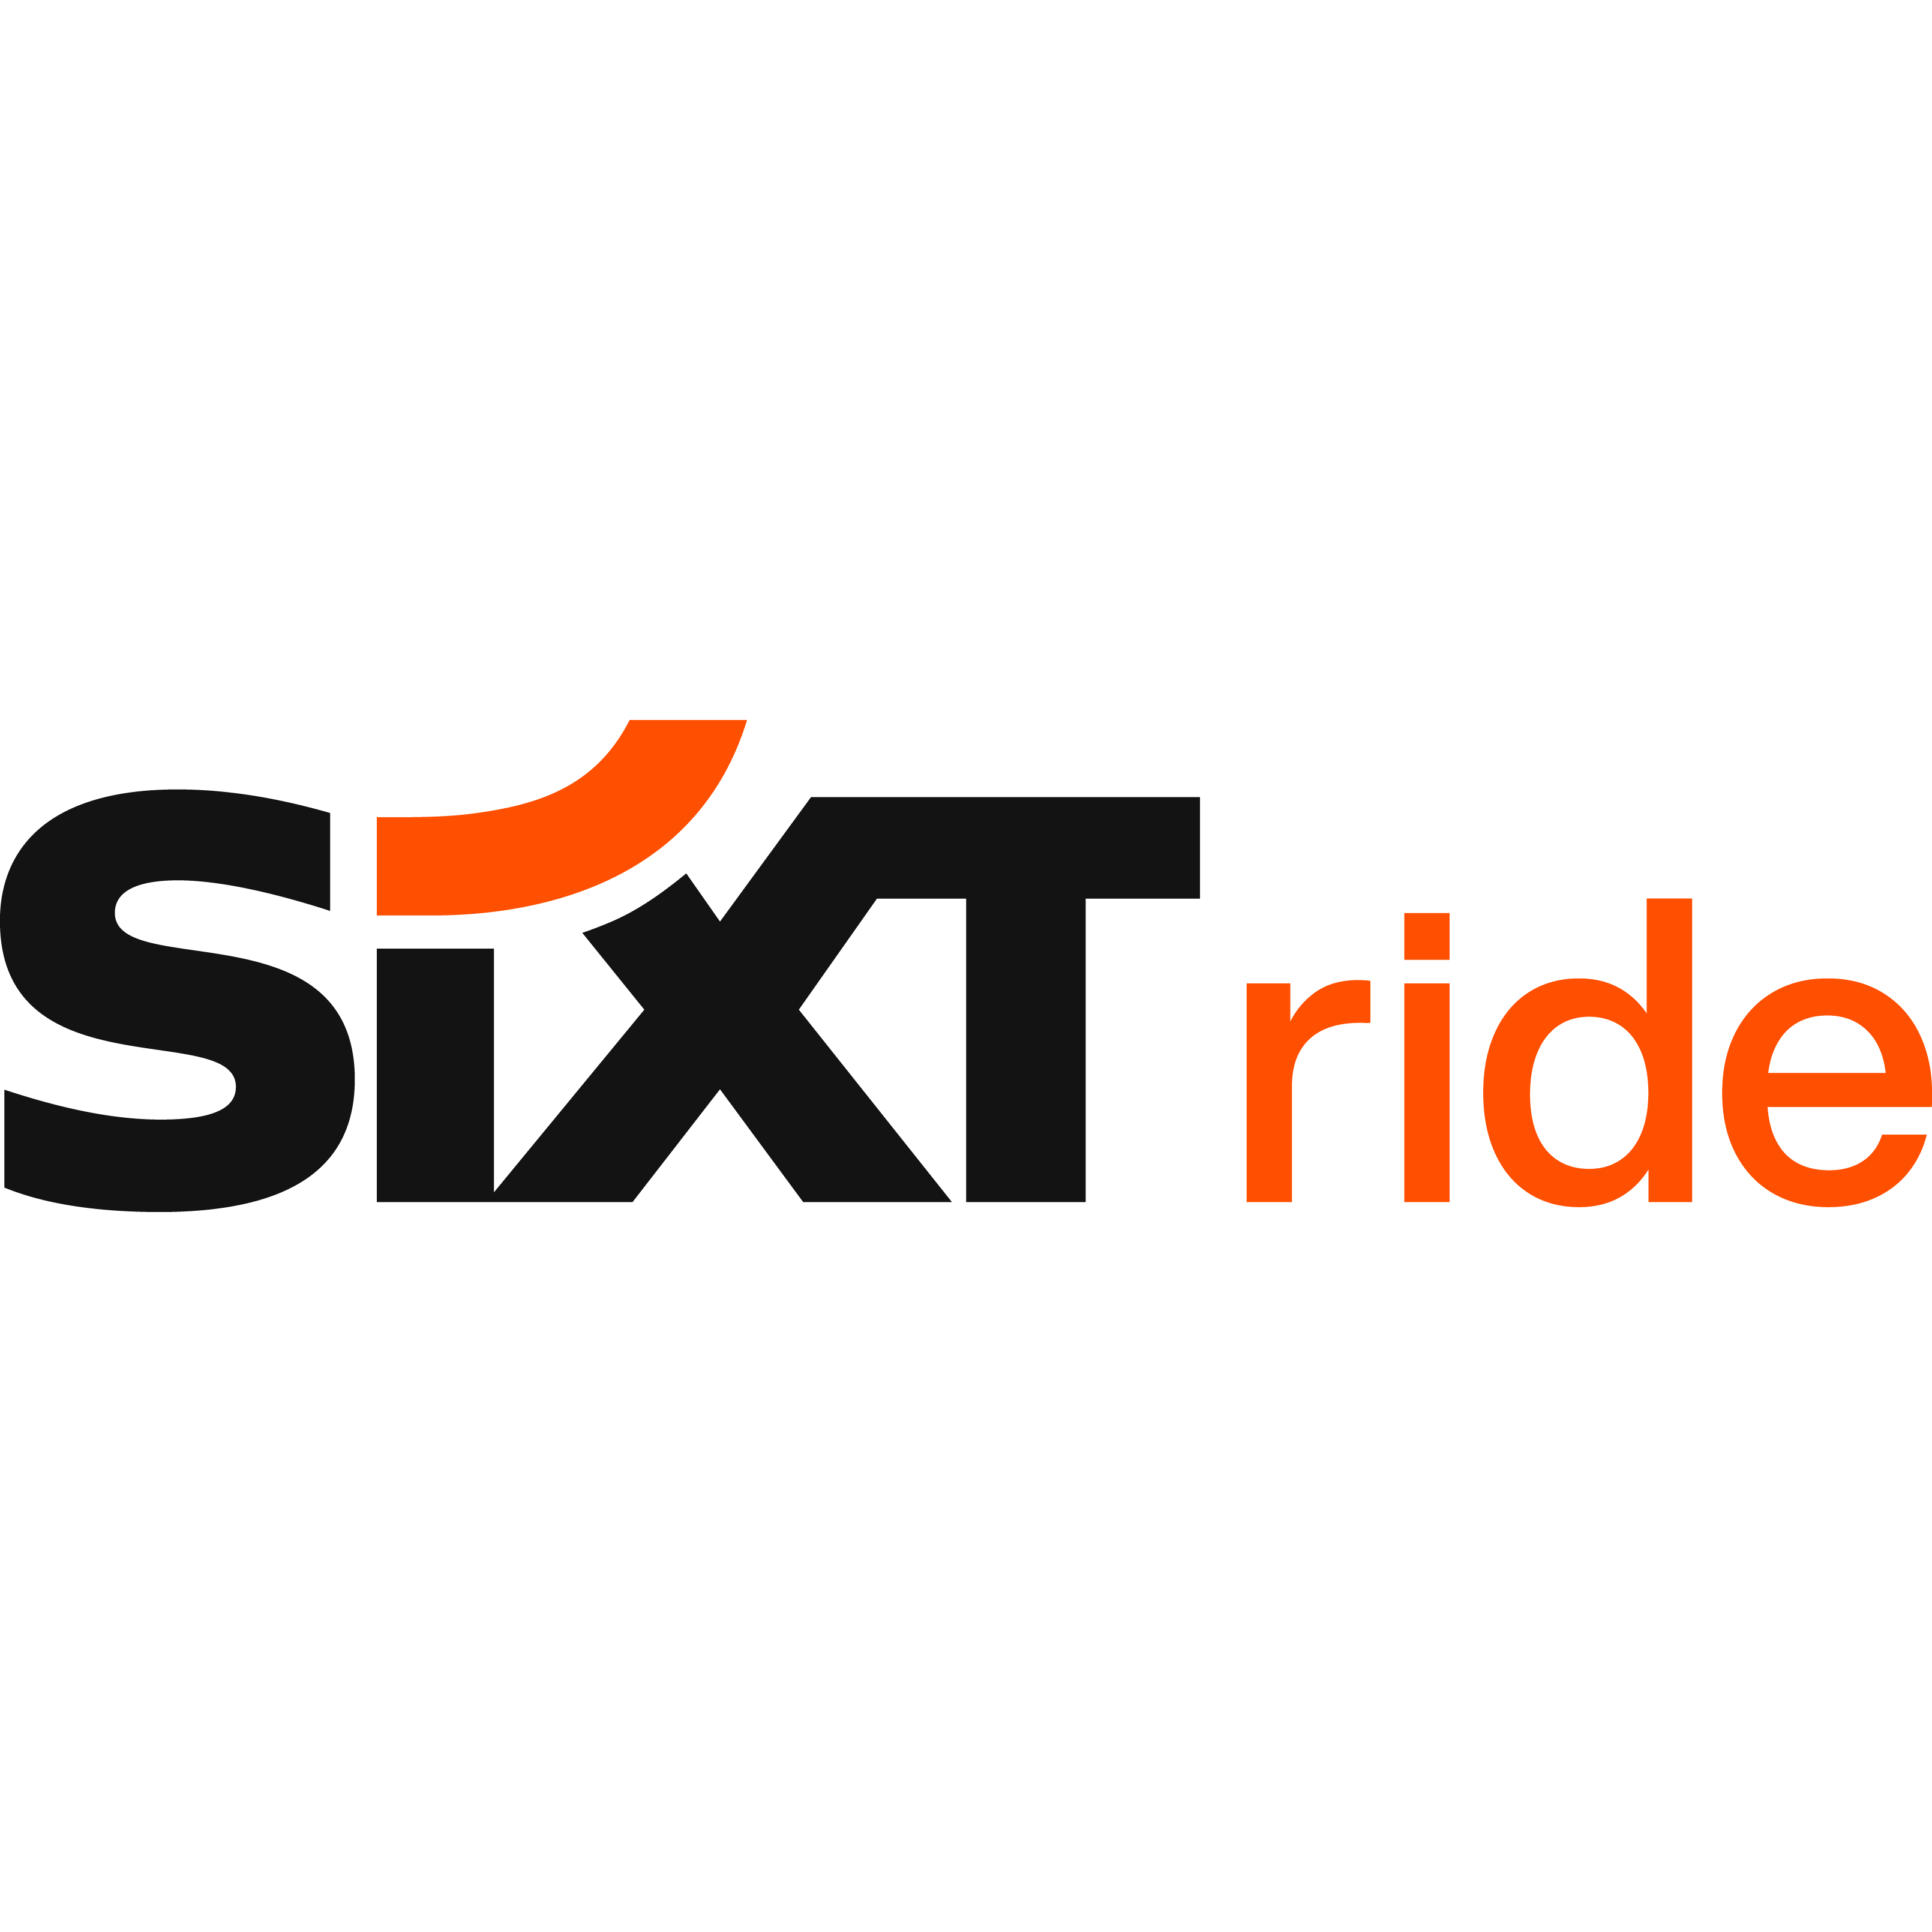 SIXT ride - flughafentransfer, flughafen taxi, limousinenservice